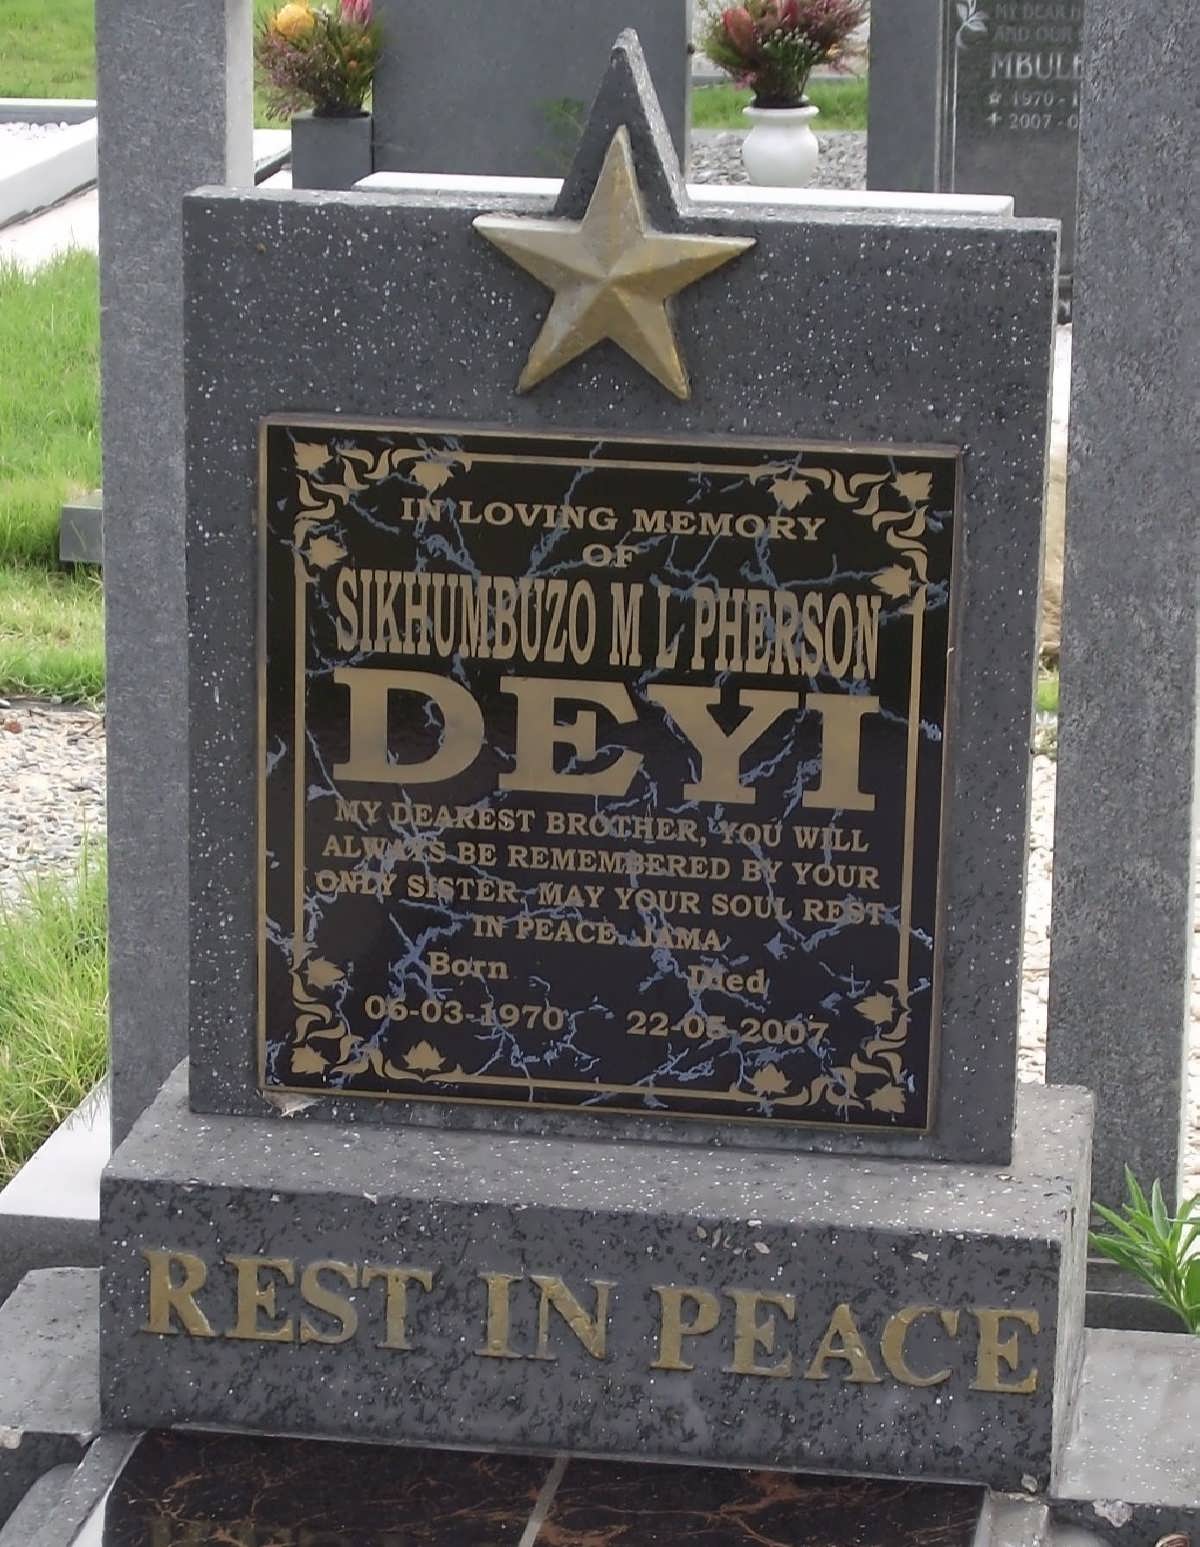 DEYI Sikhumbuzo M.L. Pherson 1970-2007